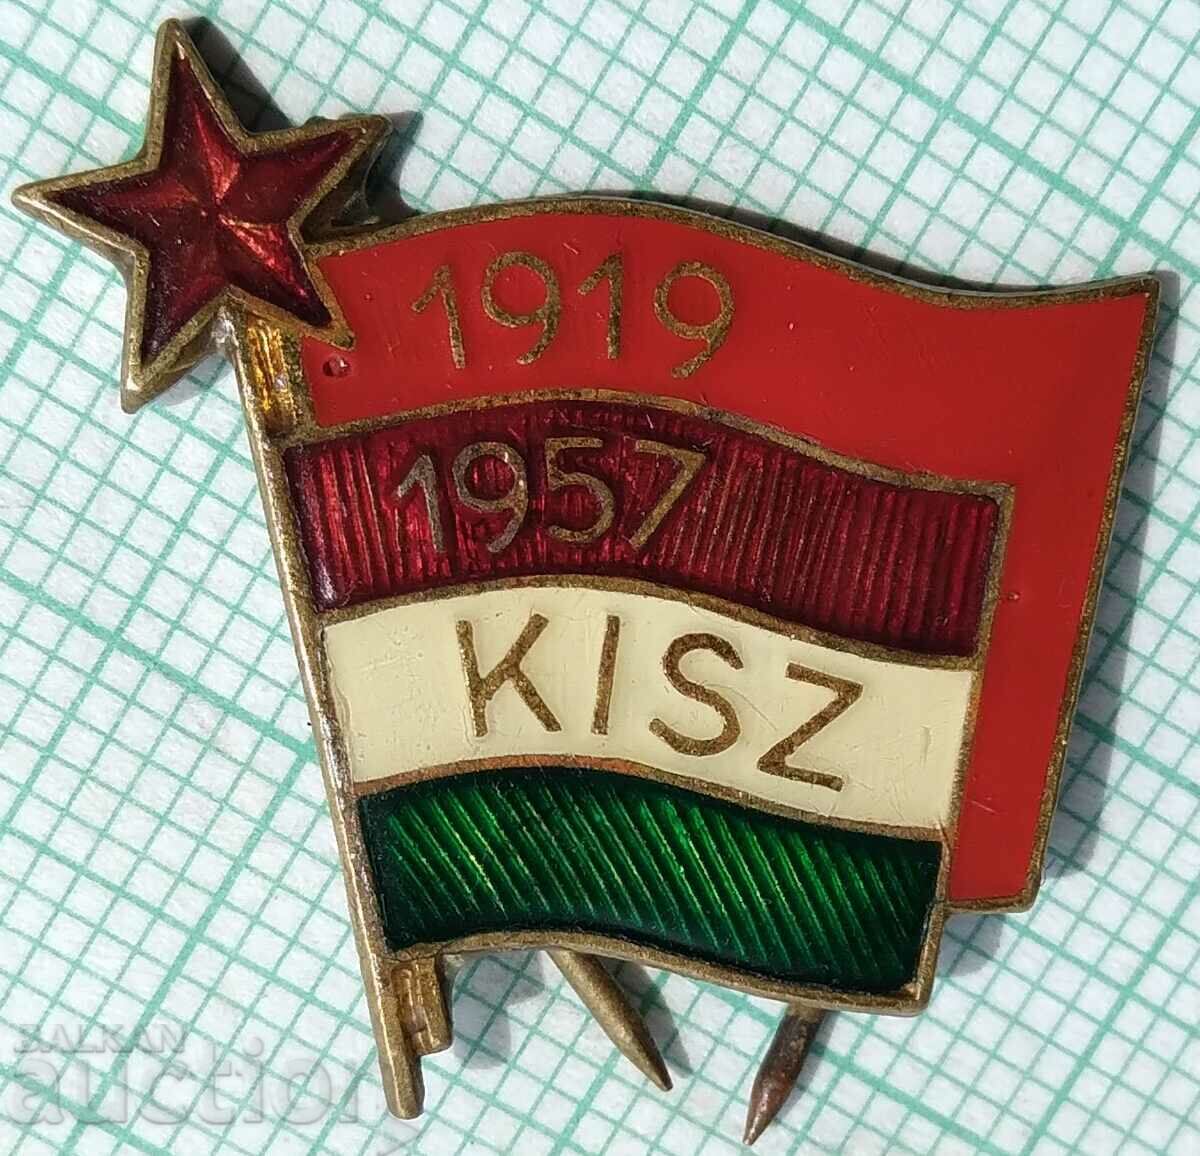 15835 Badge - KISZ Hungary - bronze enamel